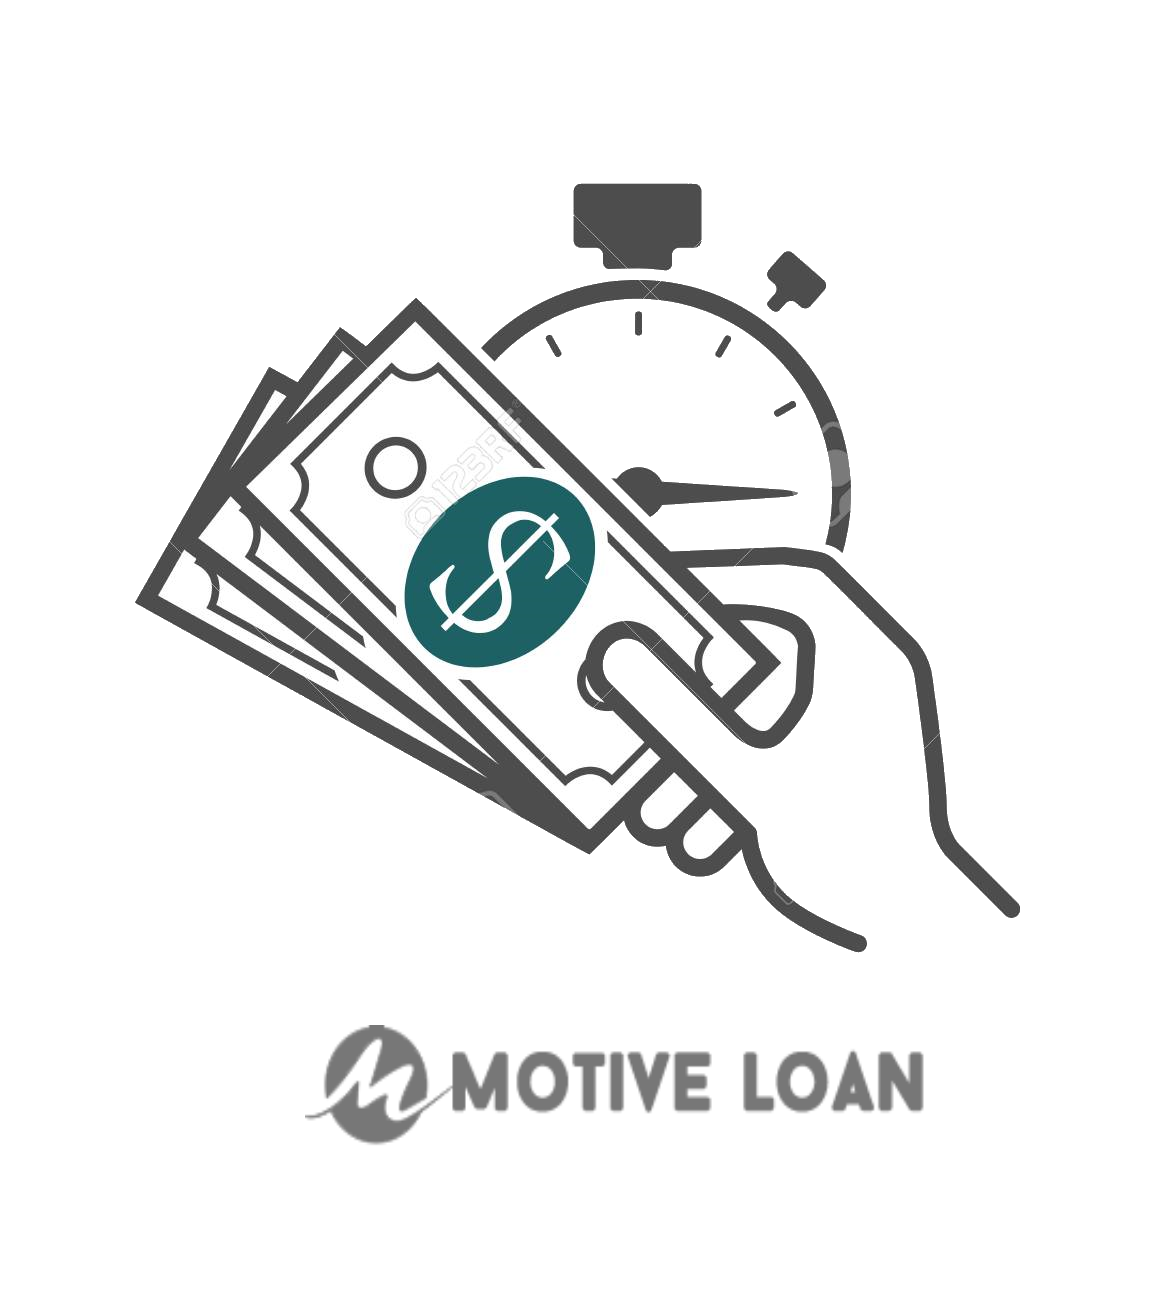 quick loan logo